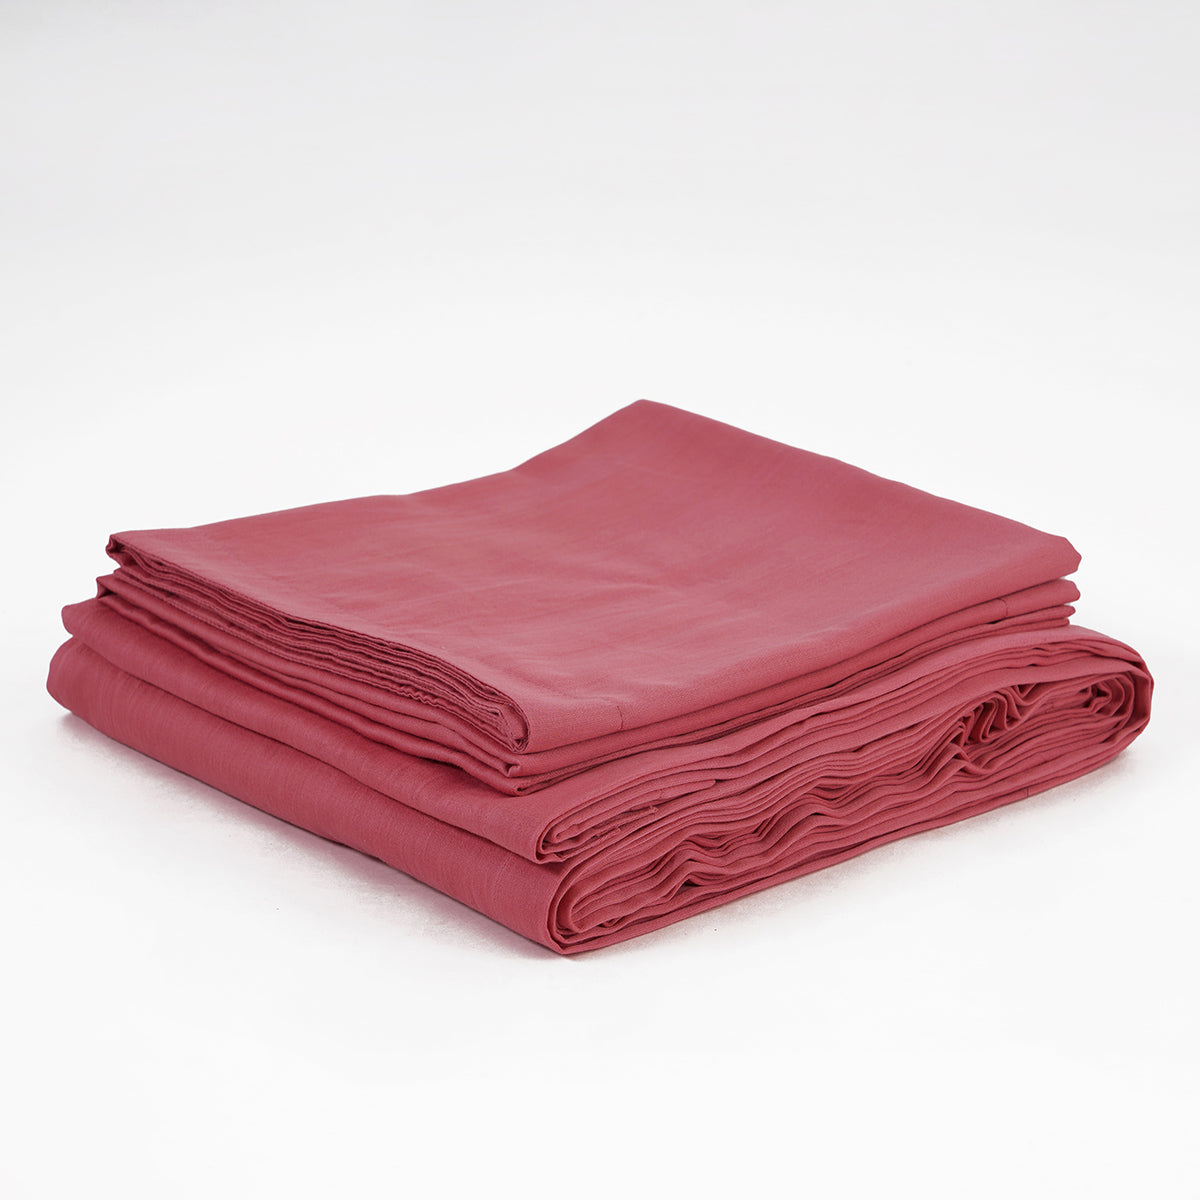 OLD ROSE 300TC flat sheet set, premium pure cotton satin, Sizes available